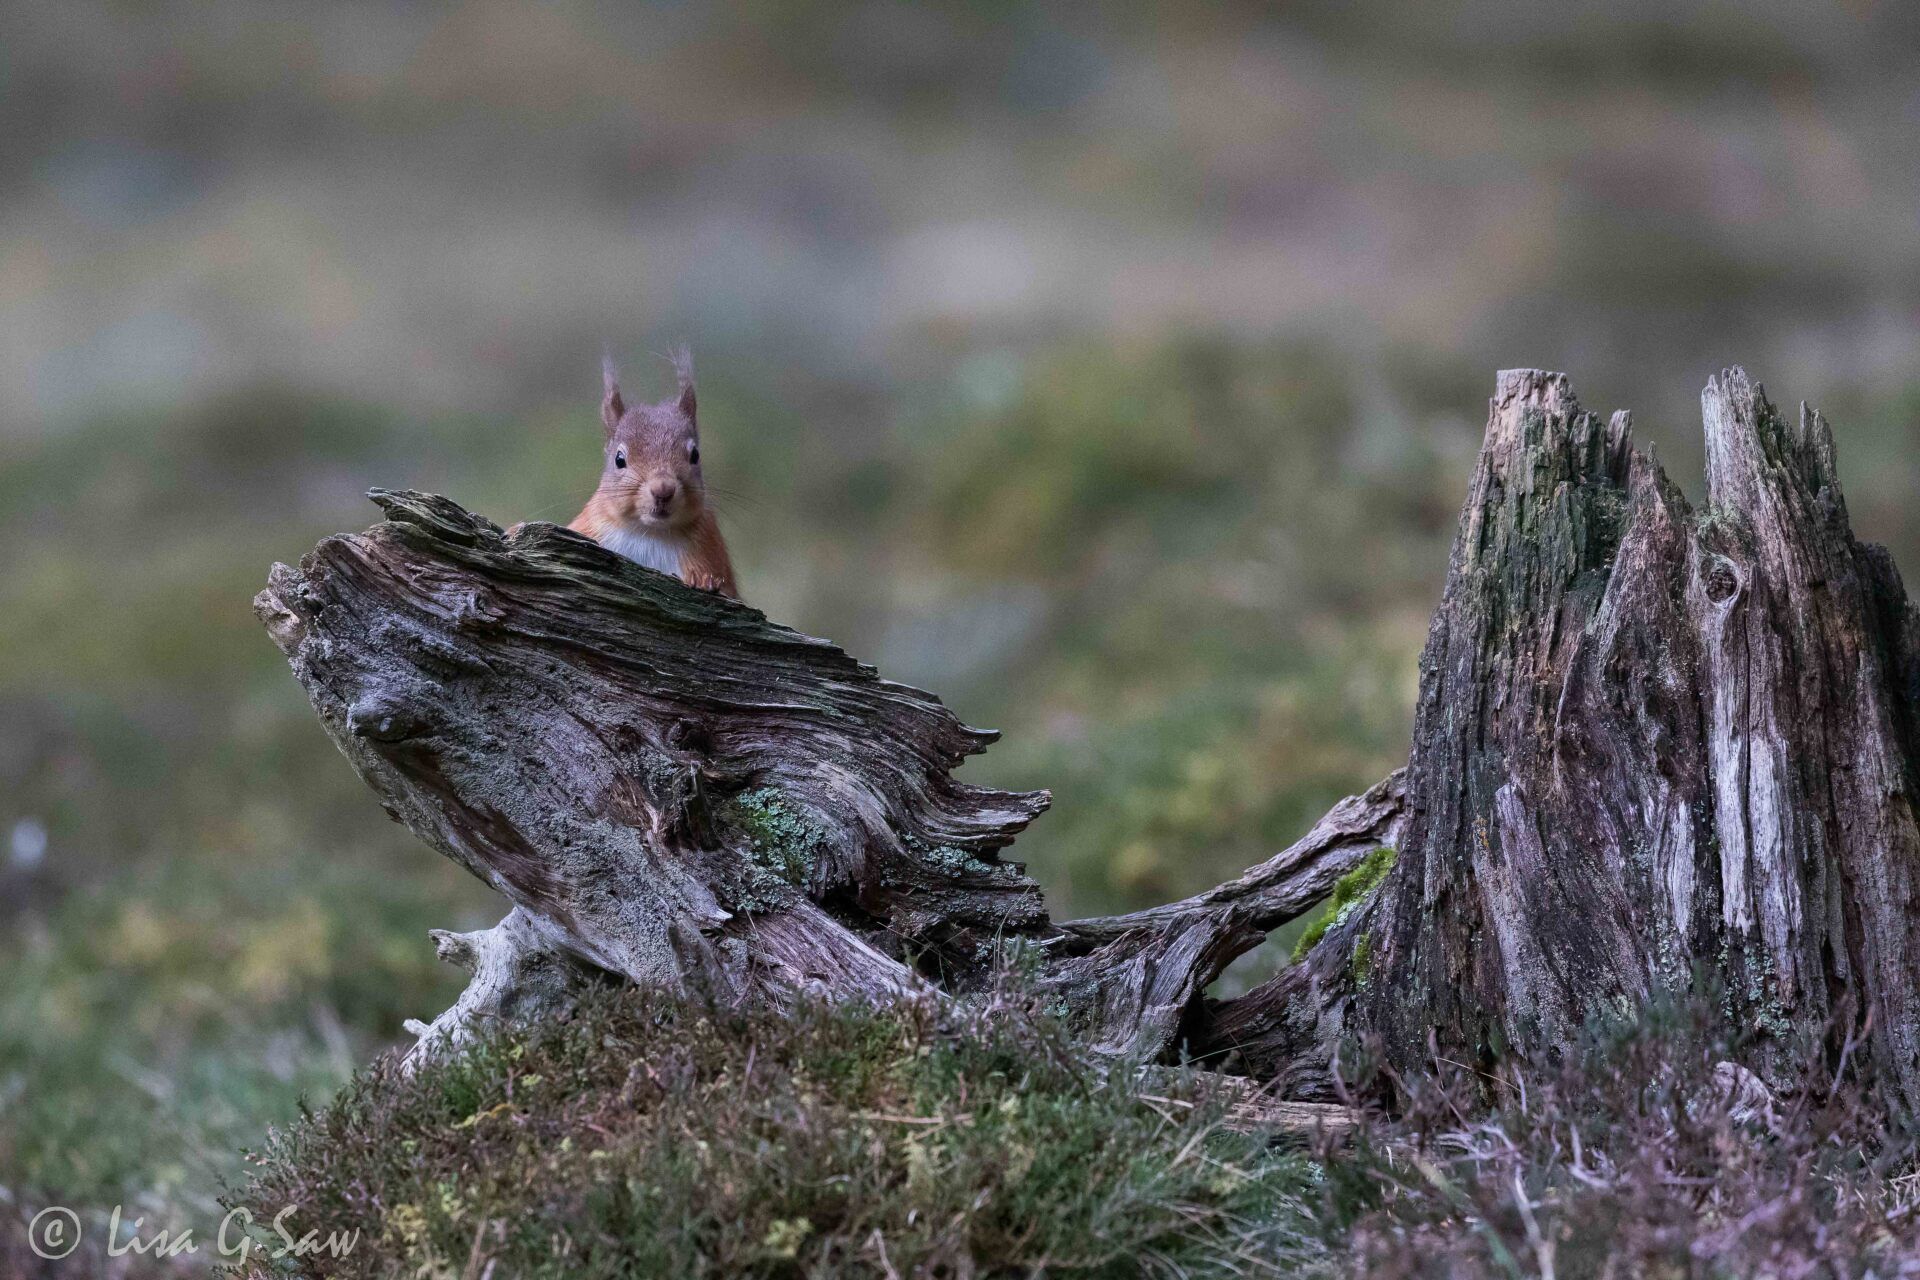 Red Squirrel behind a branch